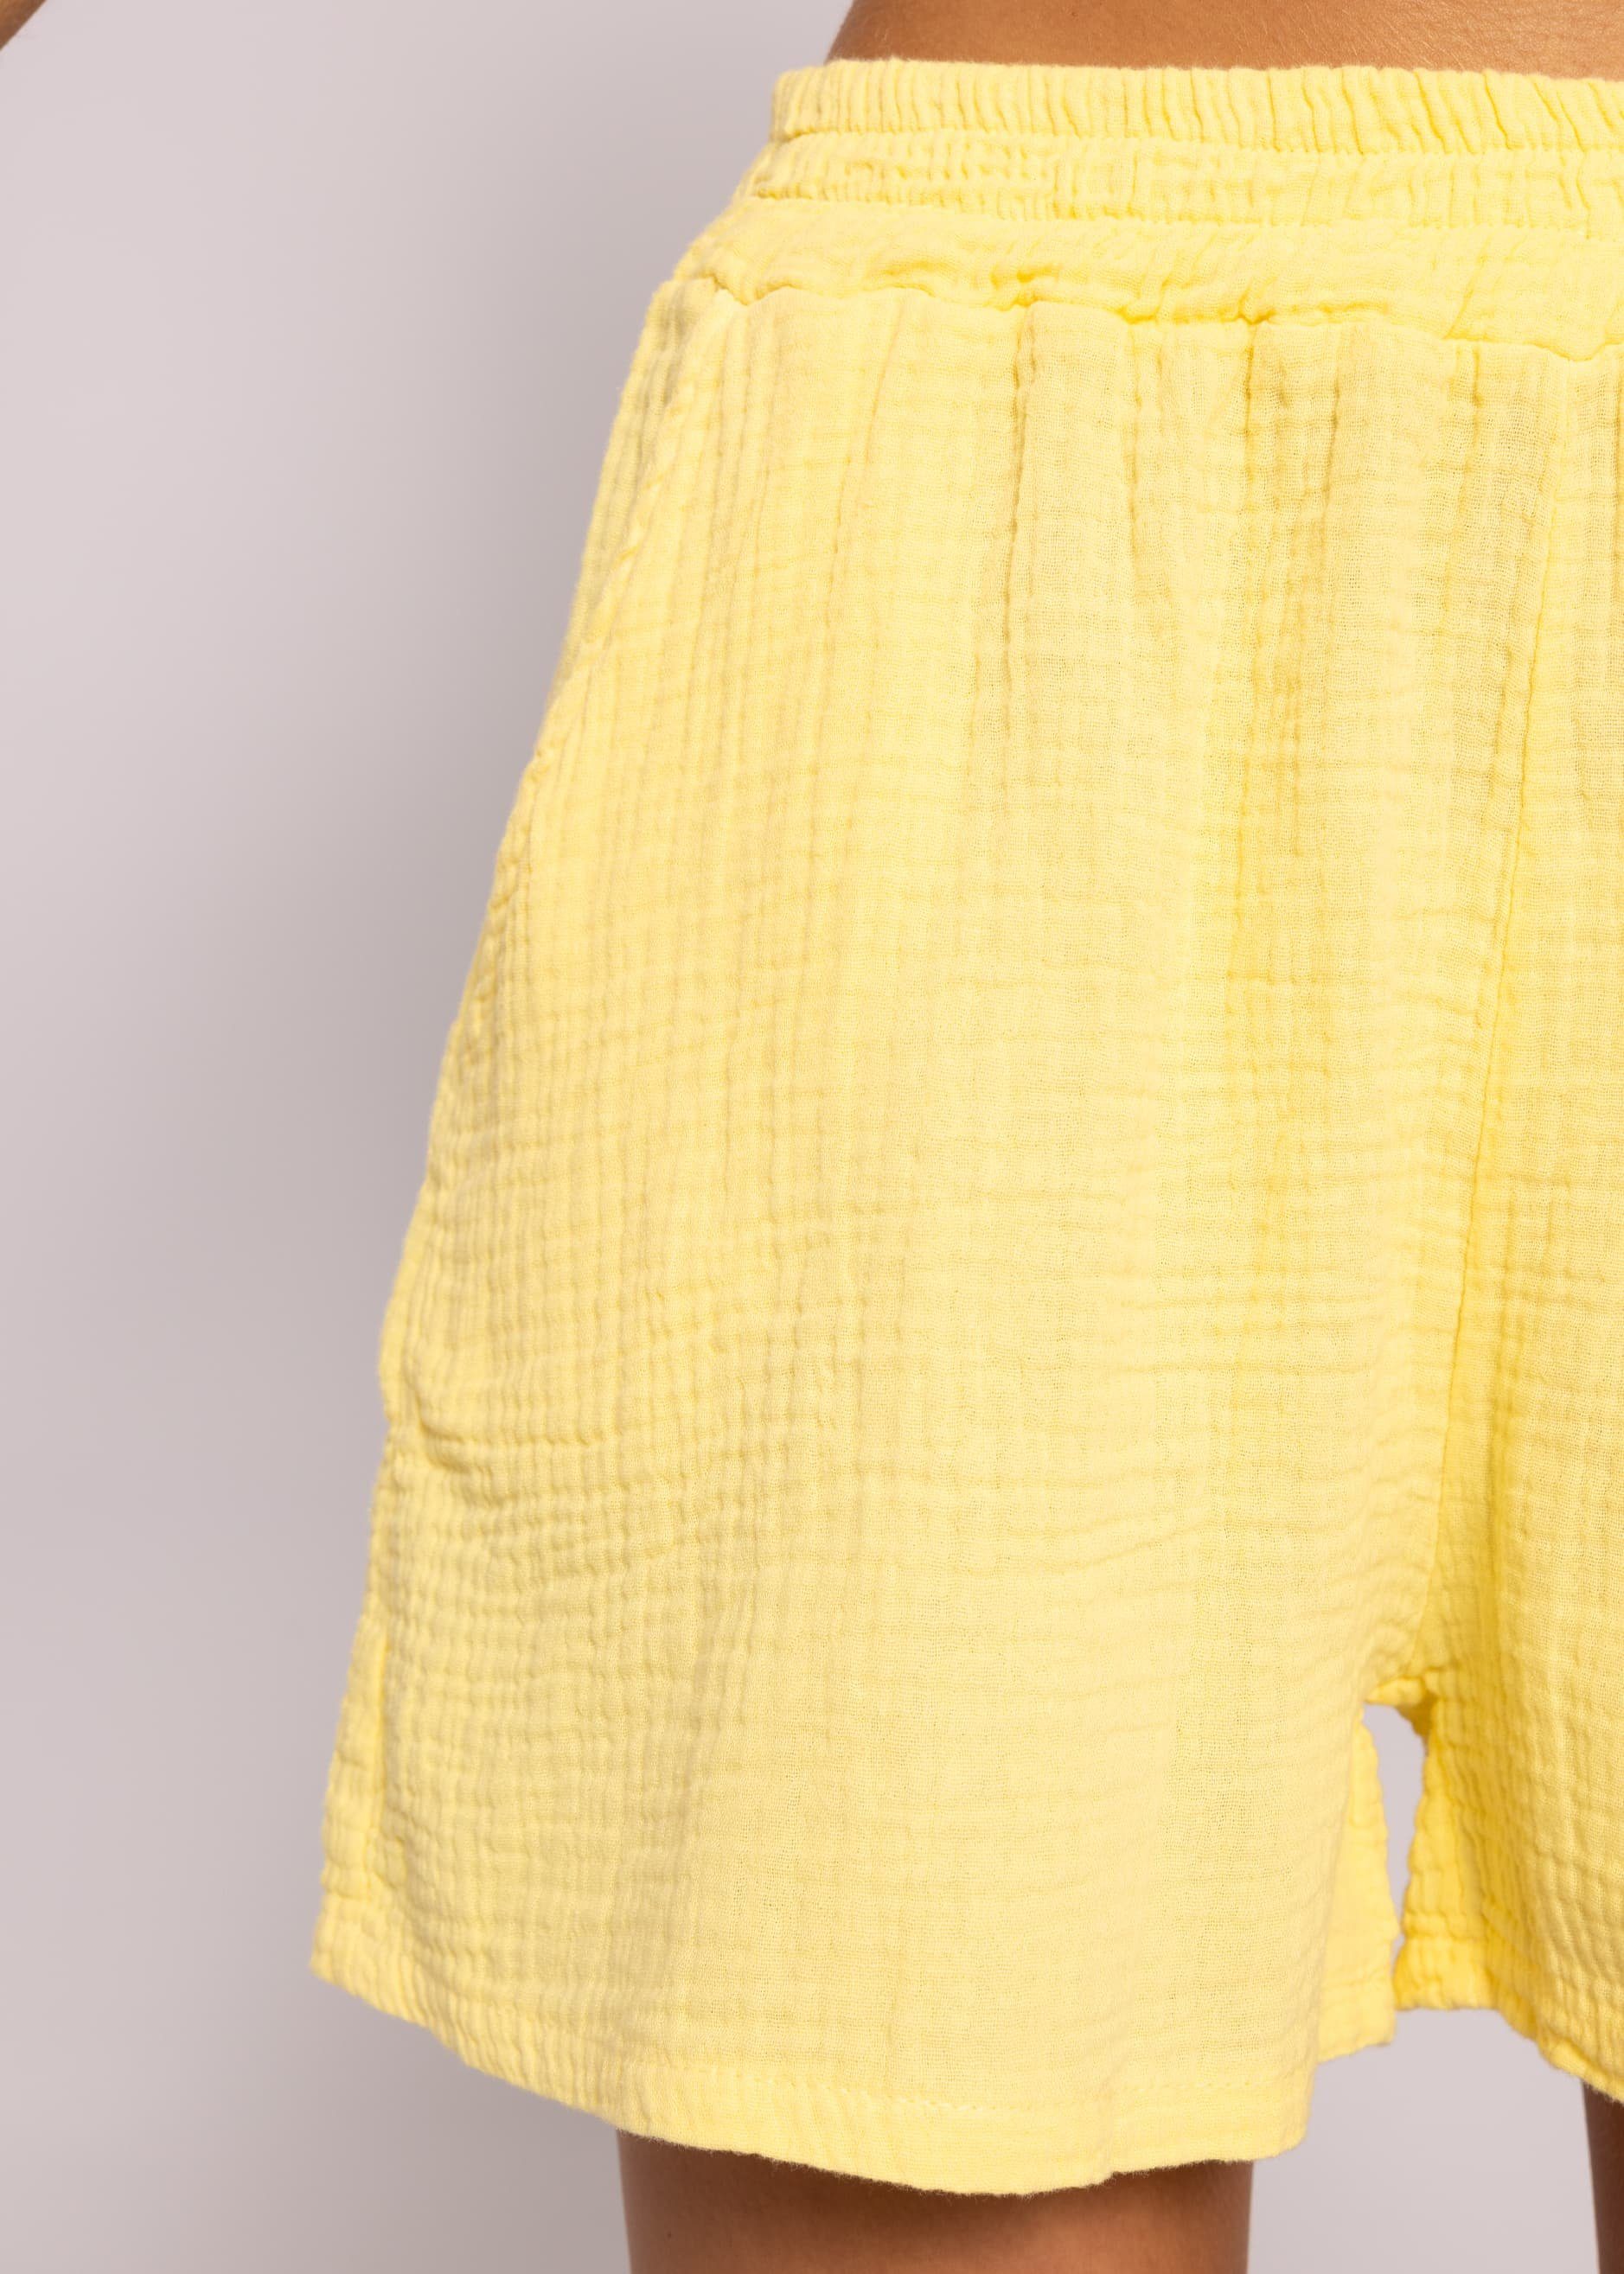 (Musselin), in Italy Shorts Hose Damen Musselin Gelb leicht, Made Baumwolle Sommer atmungsaktiv, % 100 SASSYCLASSY sehr Kurz